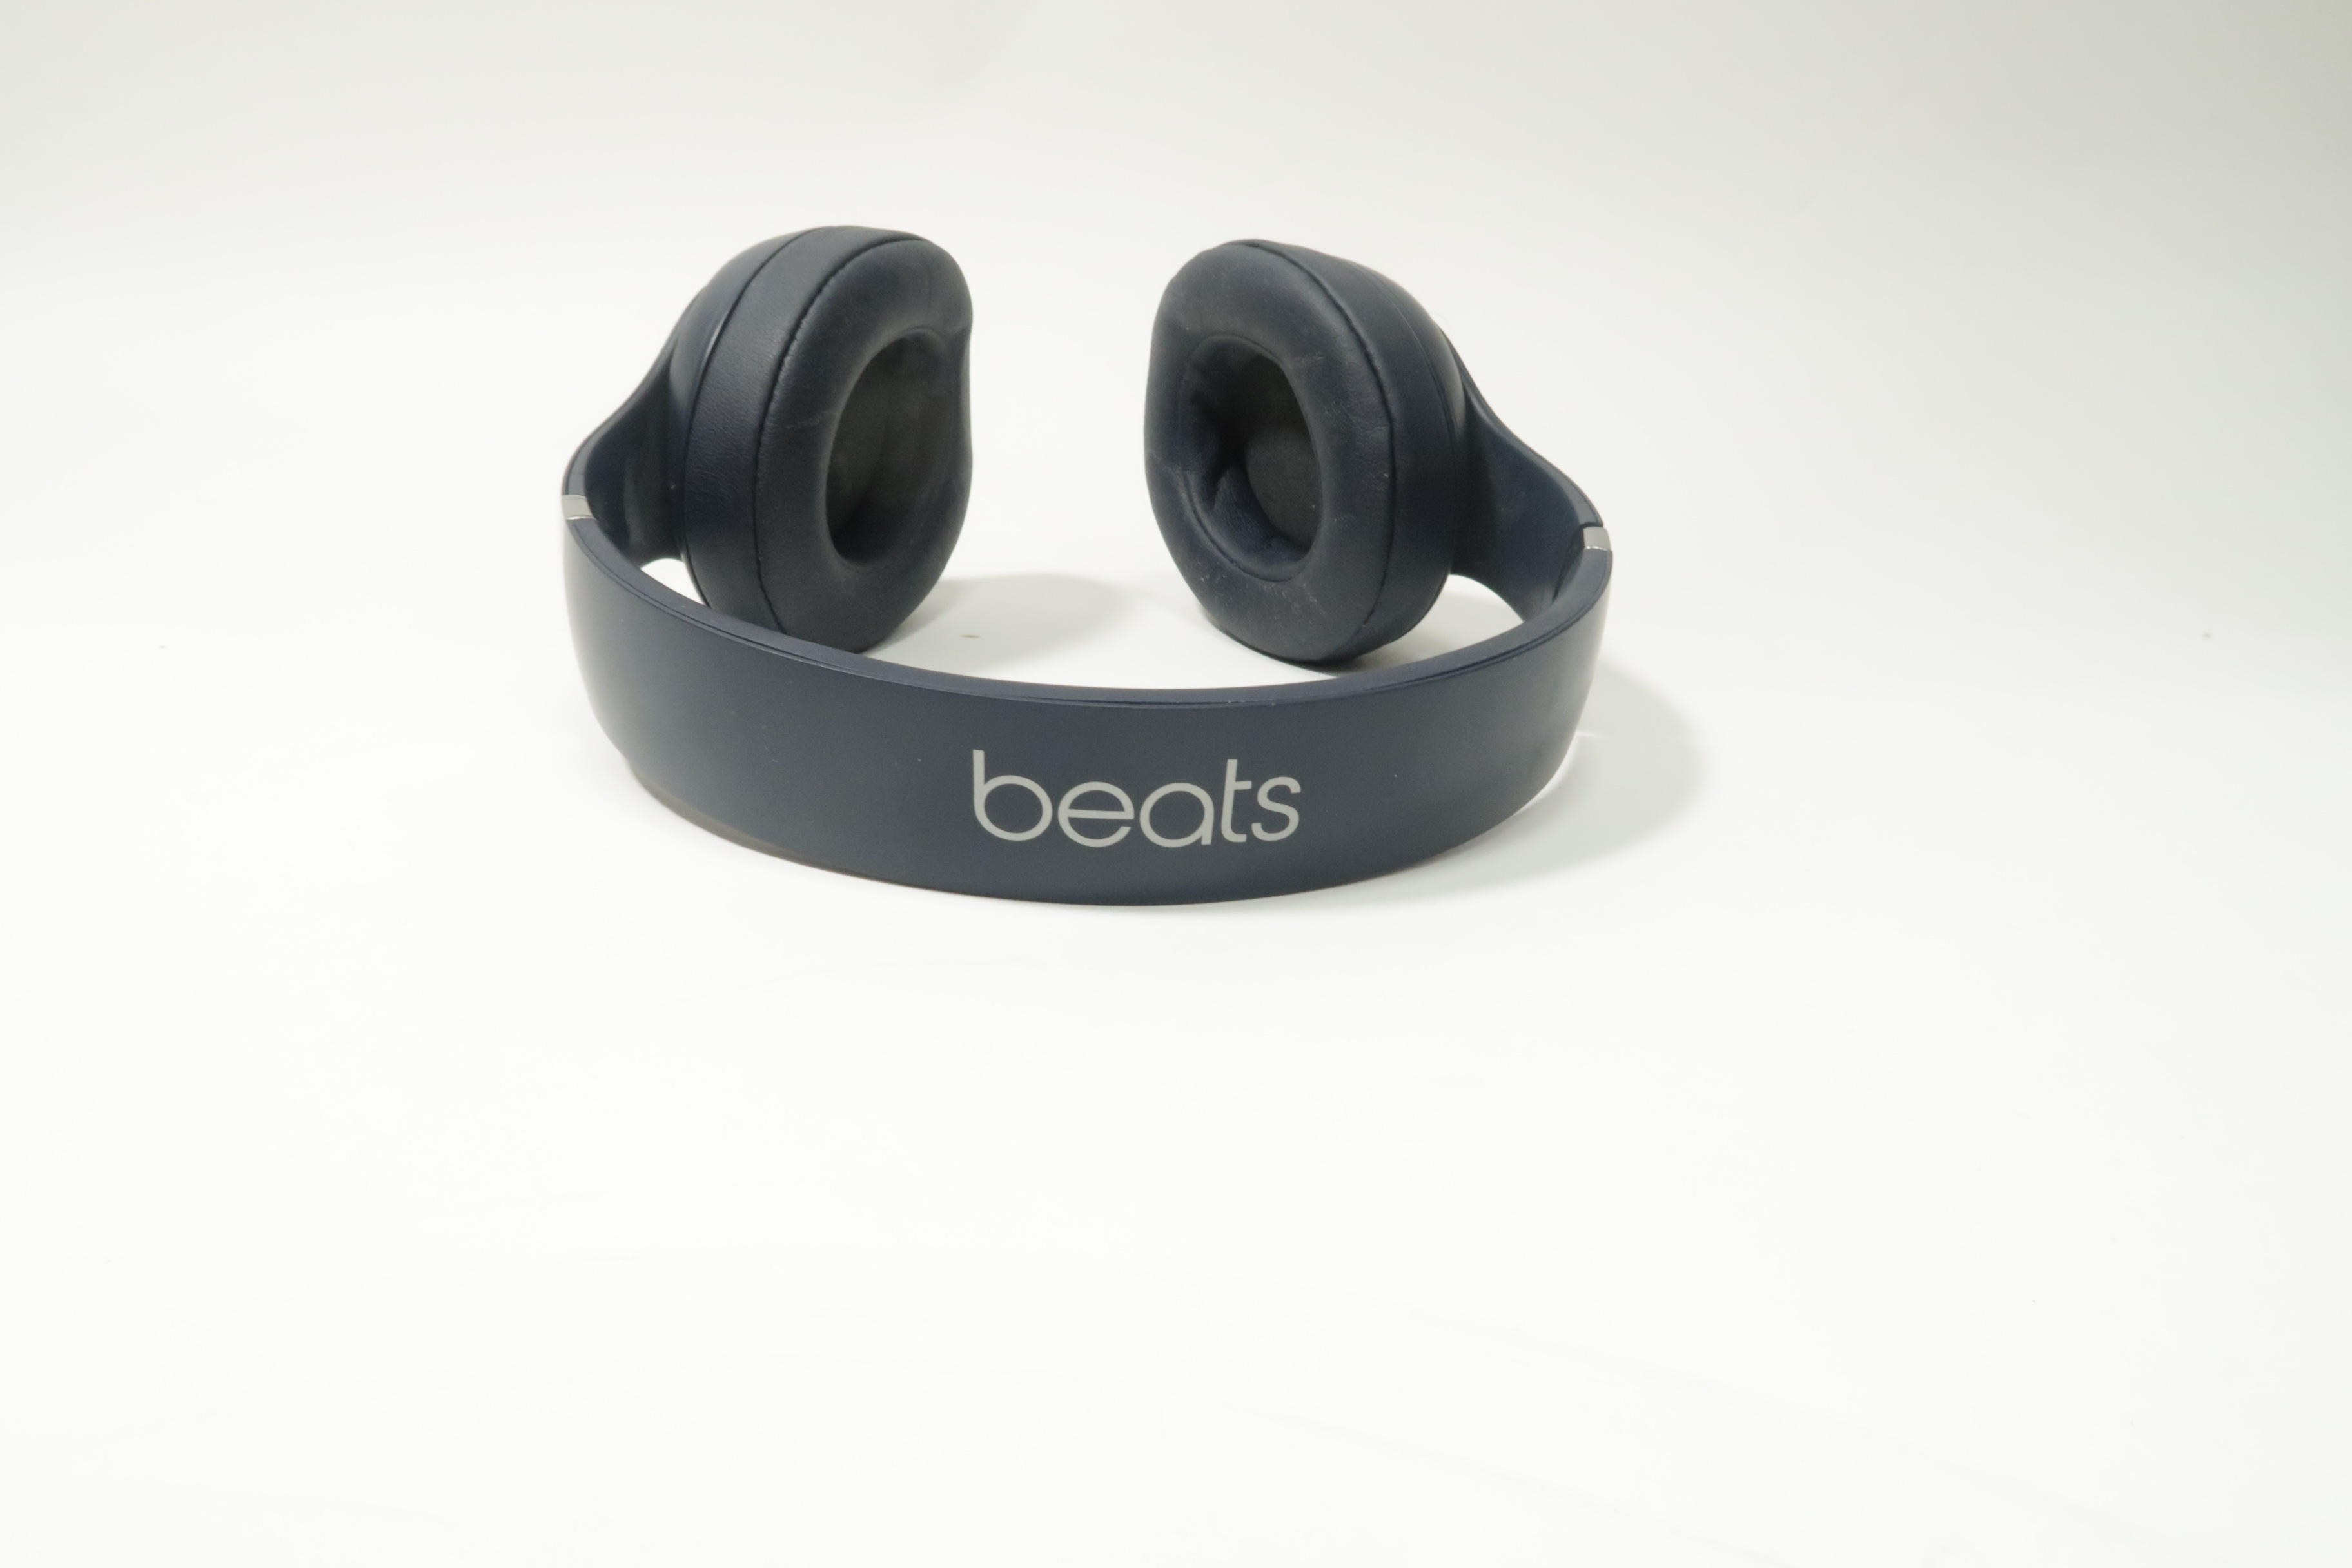 Beats by Dr. Dre Studio3 Wireless Bluetooth Headphones MX402LL/A